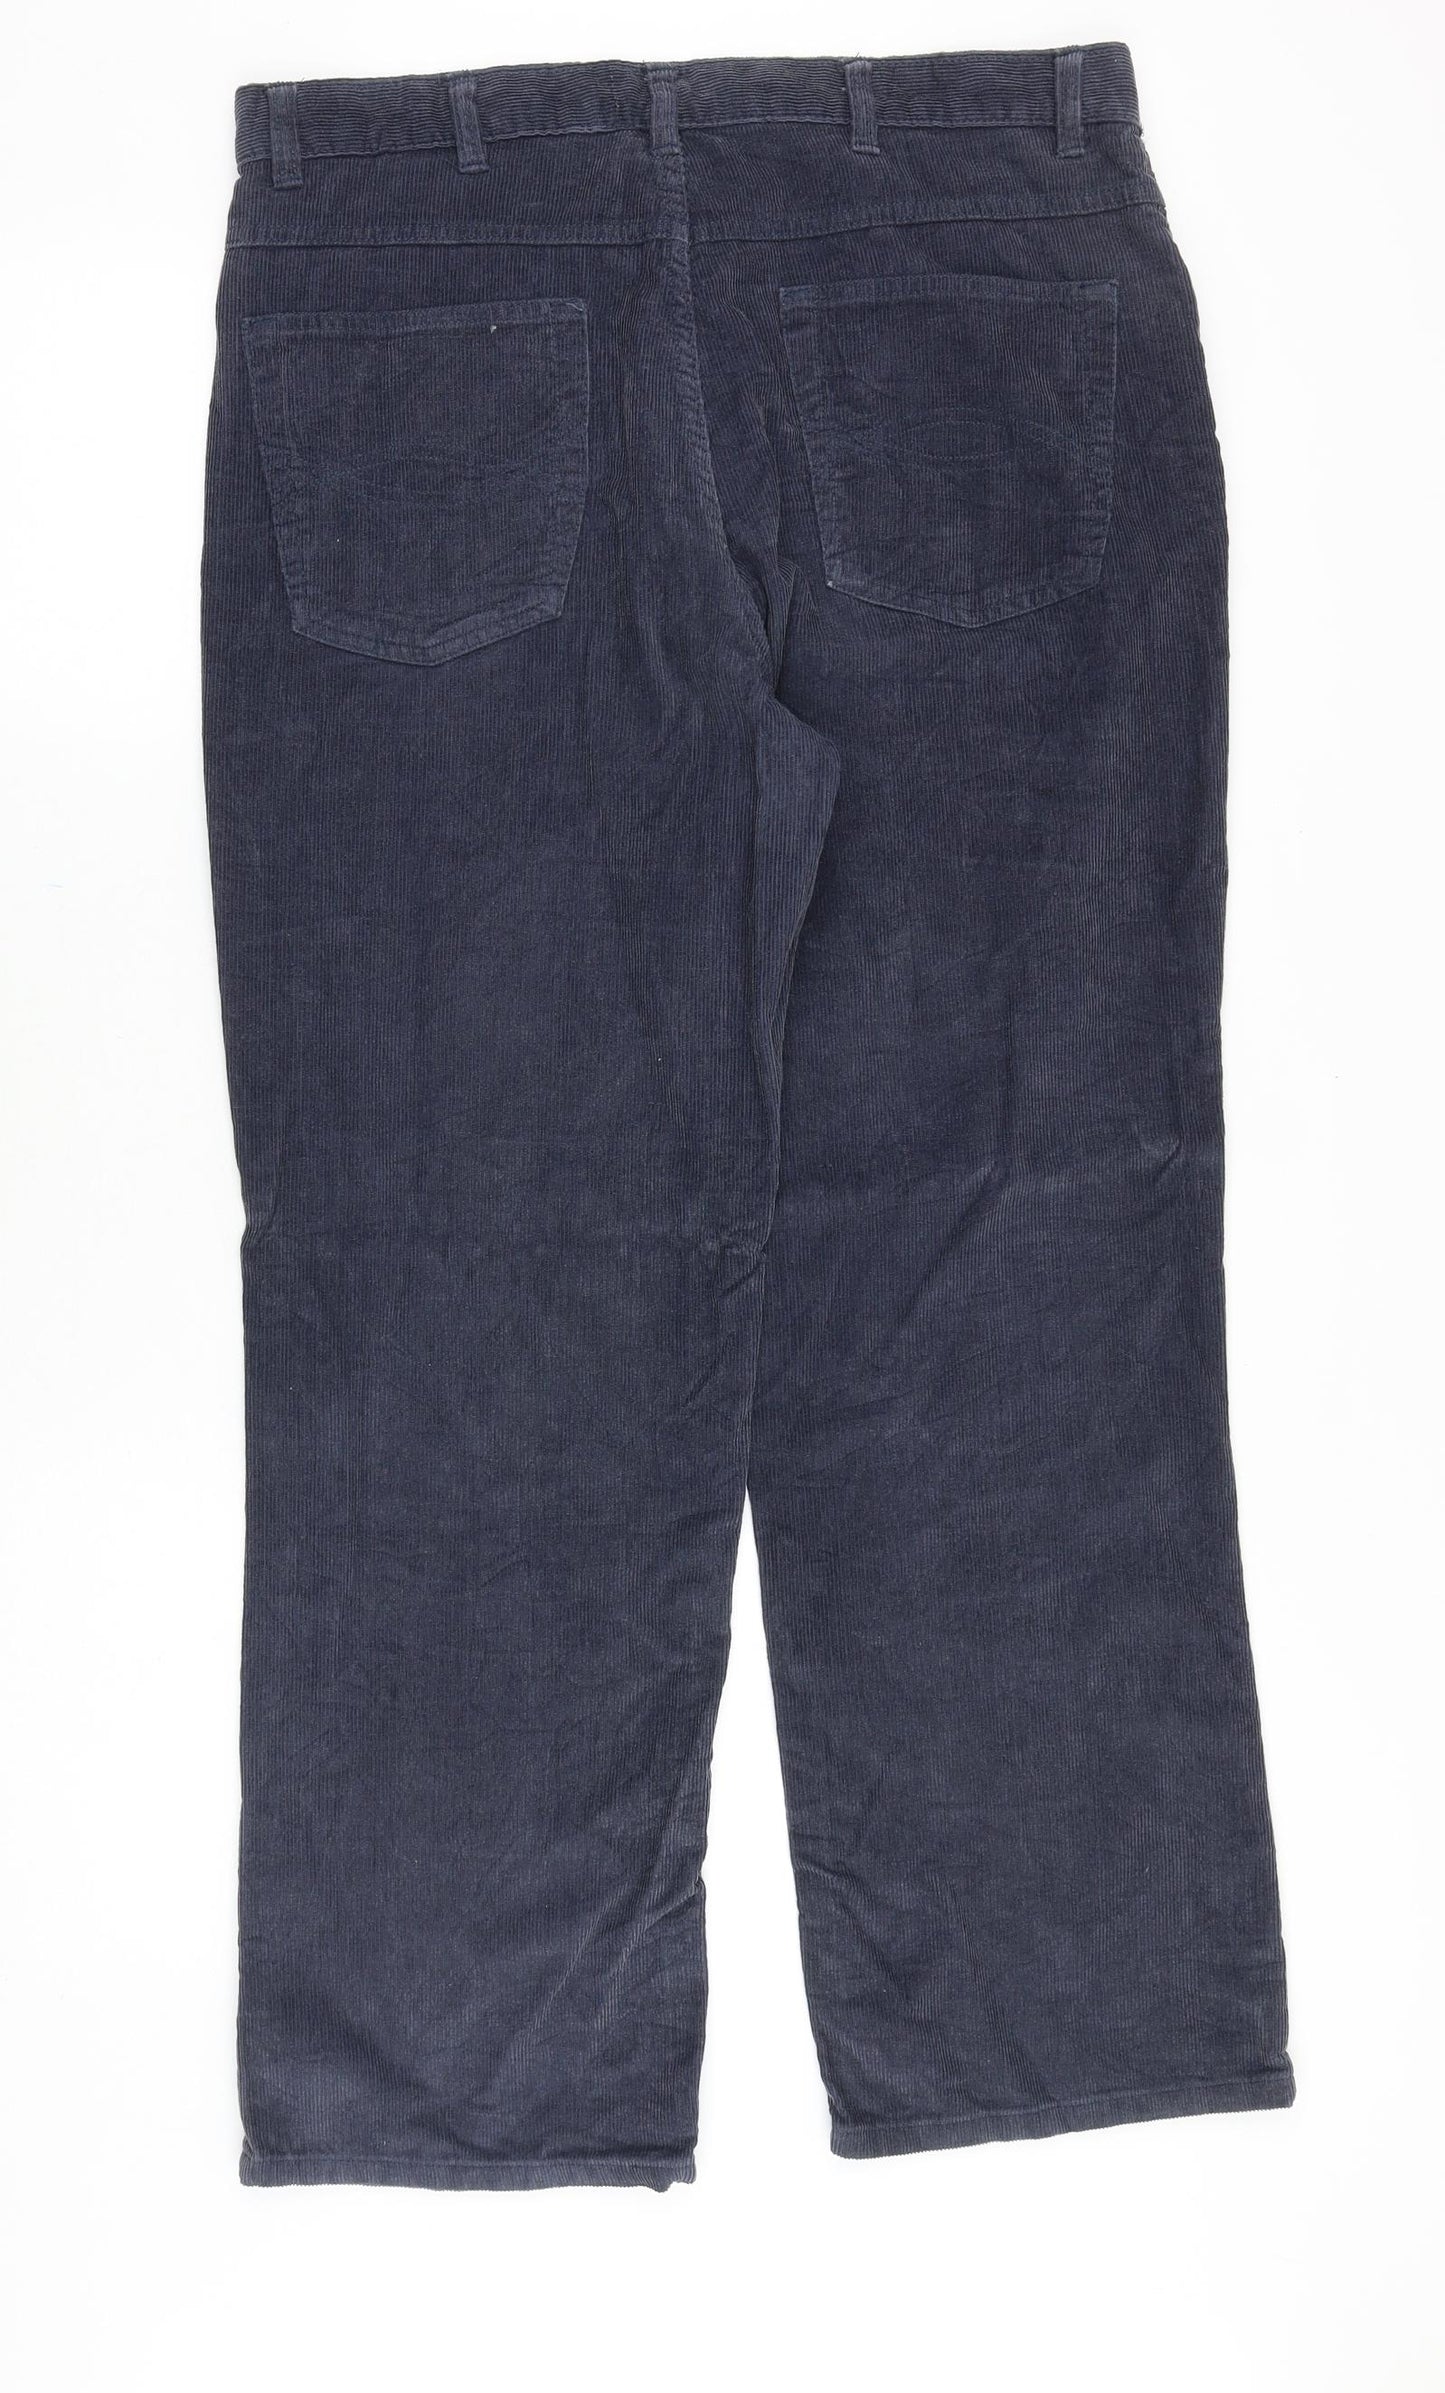 Matalan Mens Blue Cotton Trousers Size 36 in Regular Zip